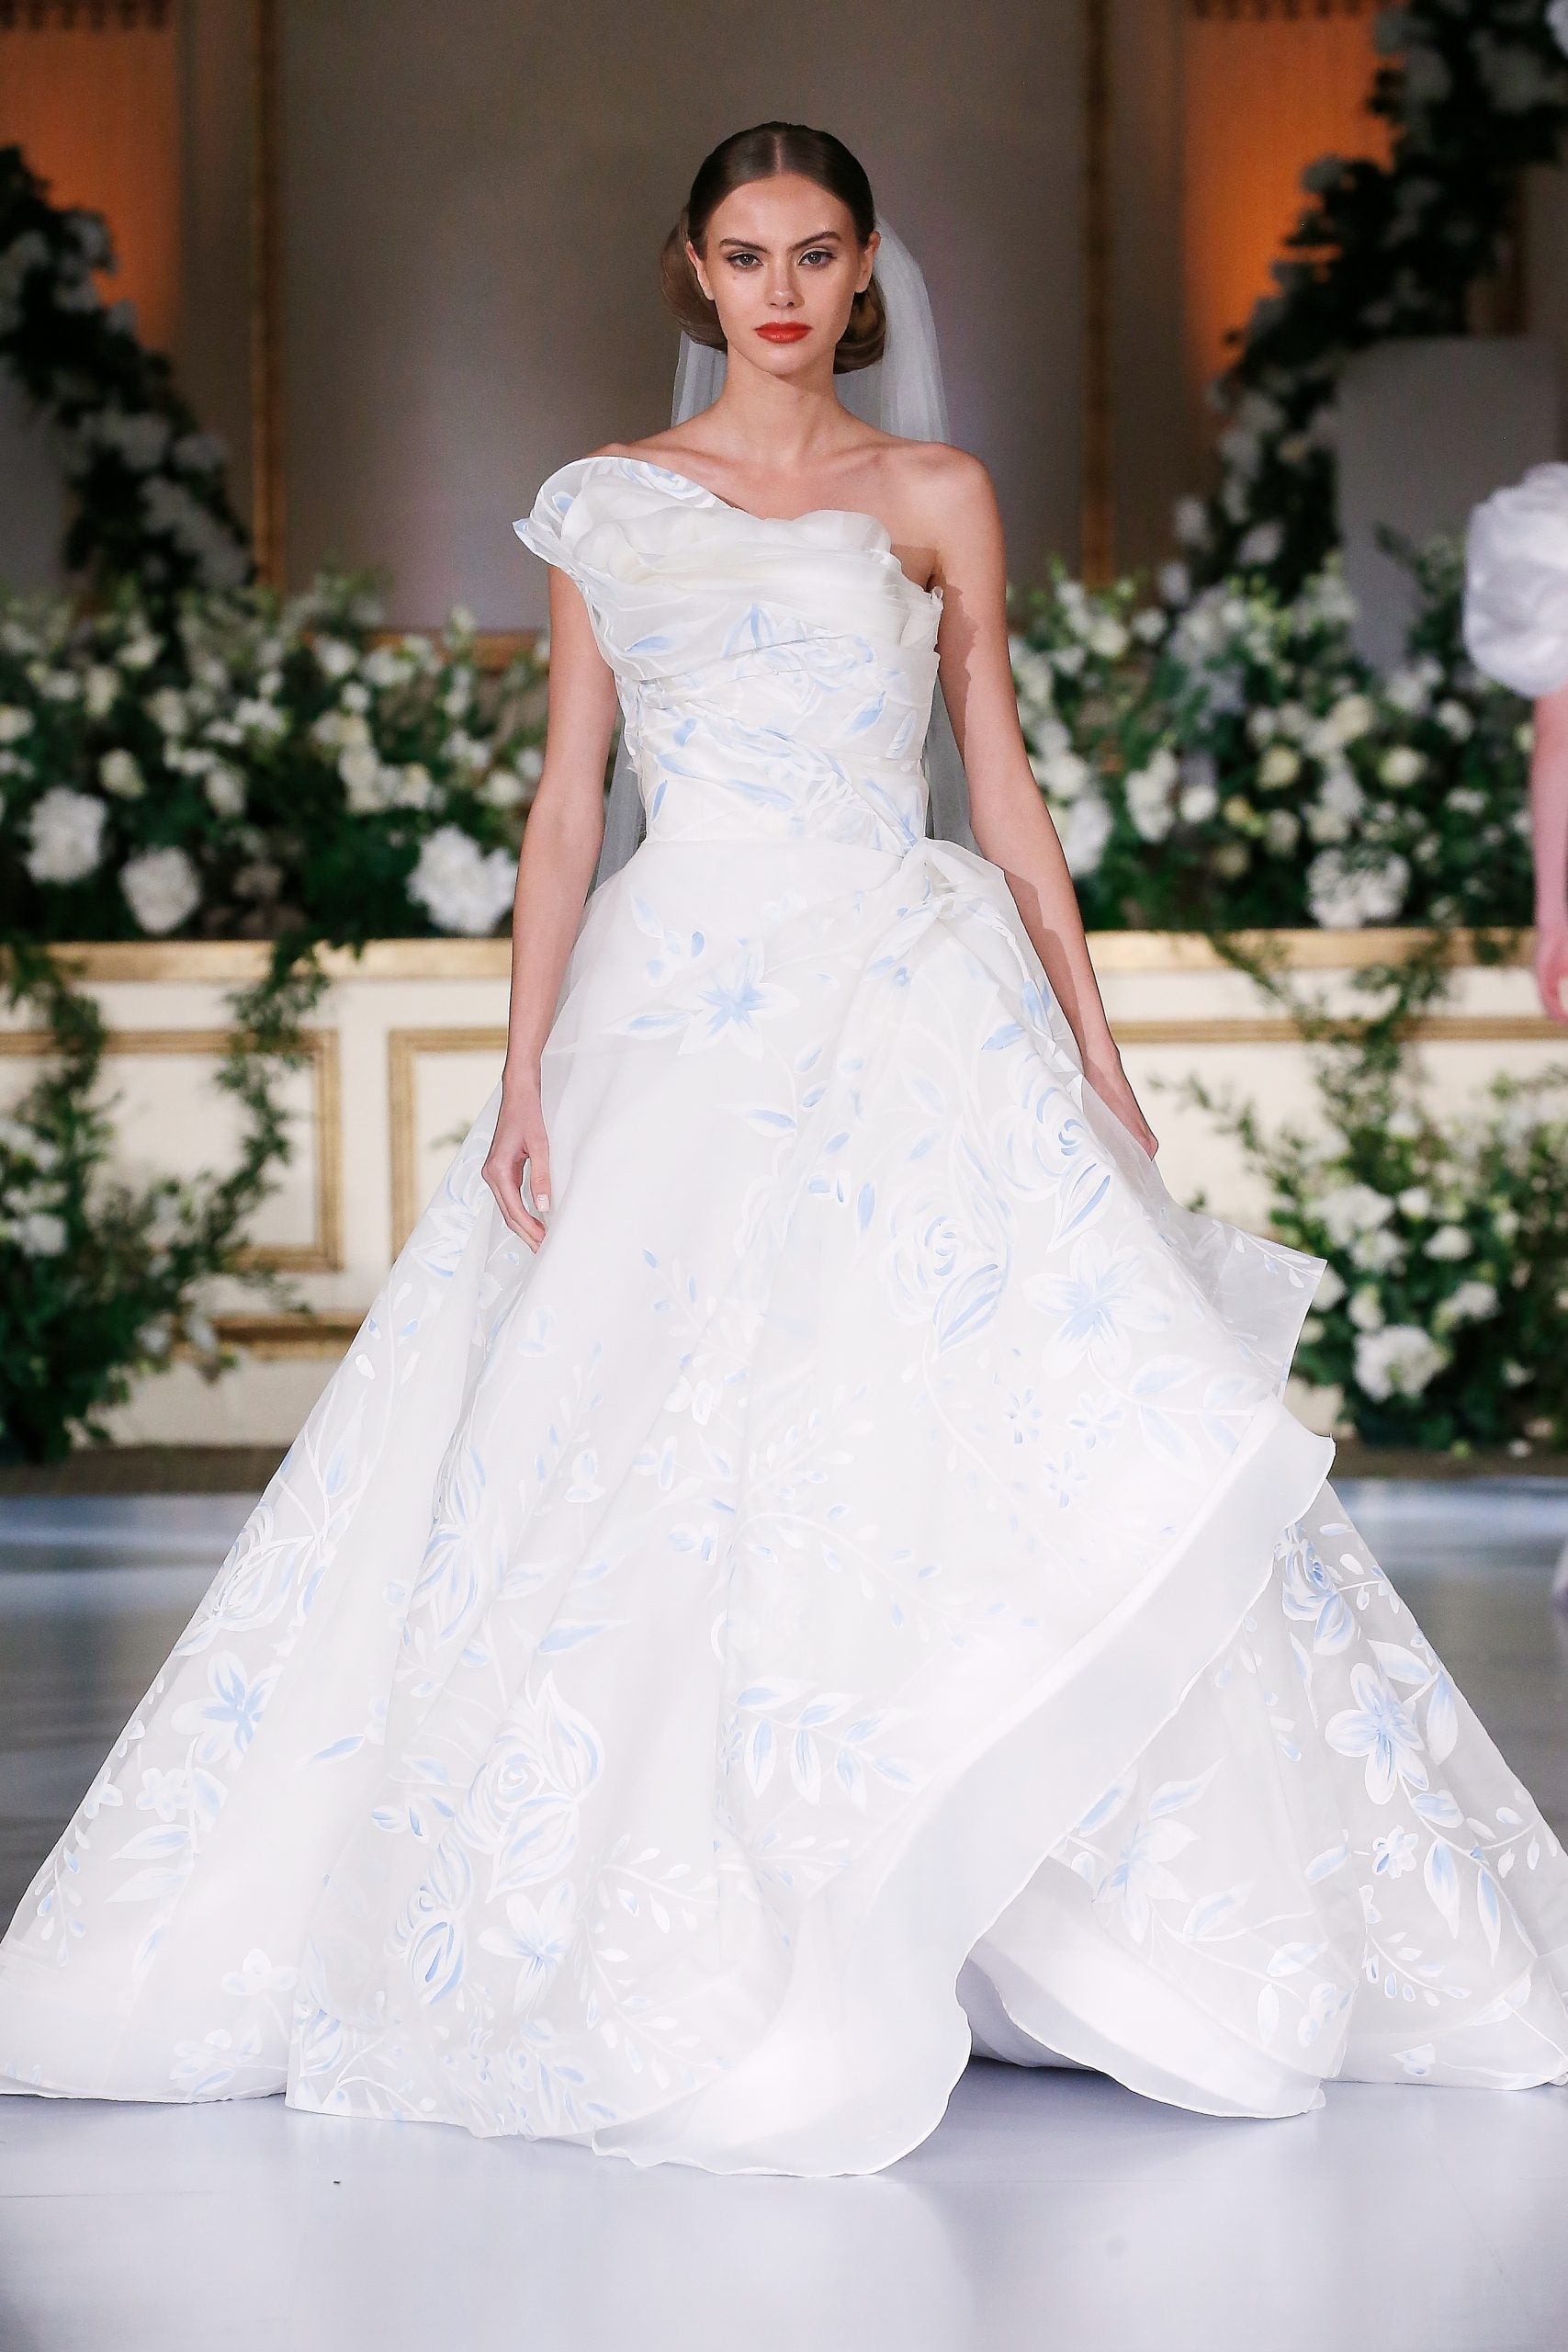 Meghan Markle wedding dress designer latest news - Suits actress choses  Ralph & Russo | Express.co.uk